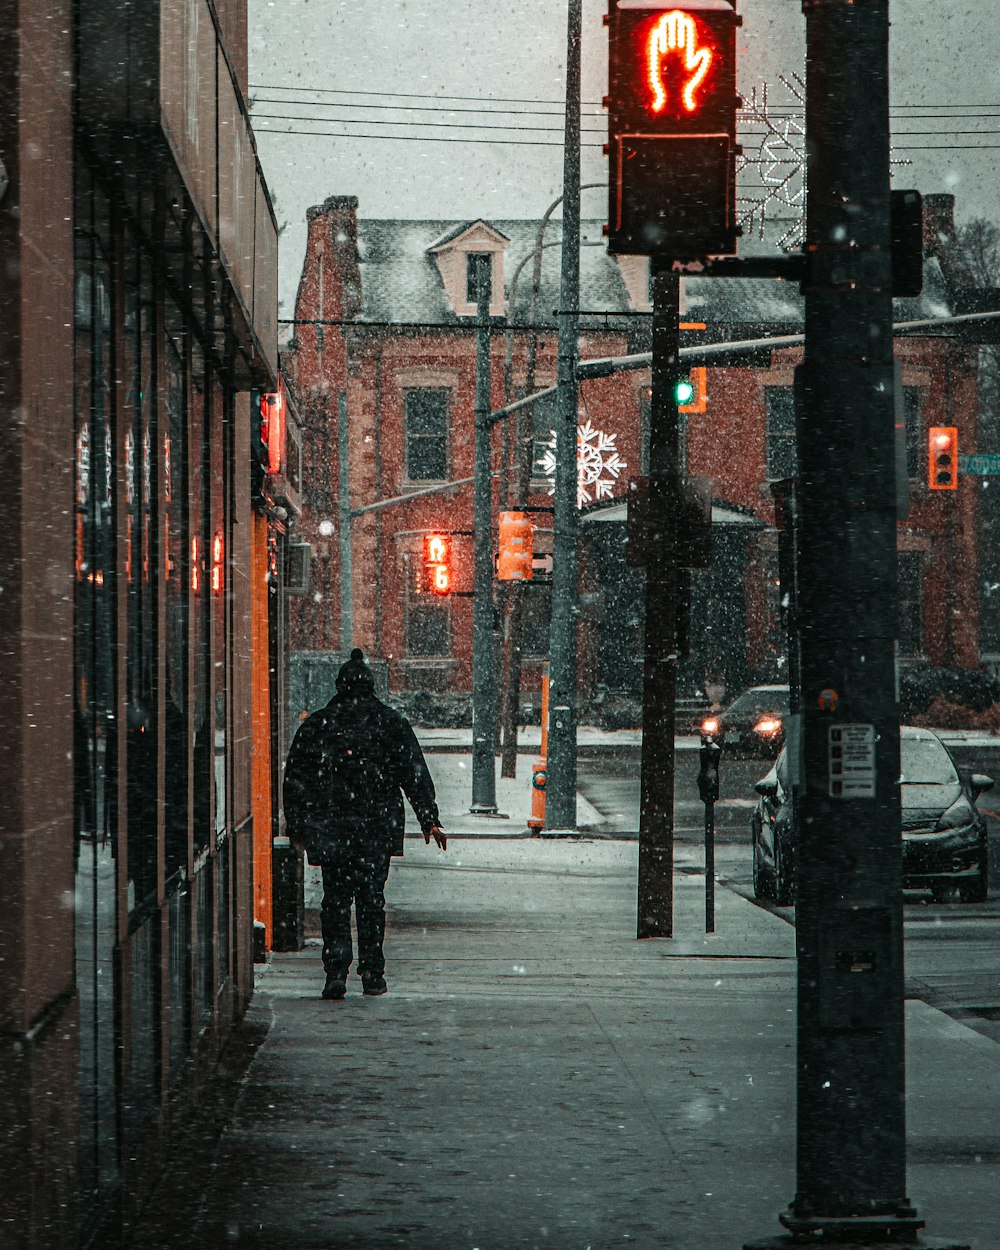 a man walking down a street next to a traffic light